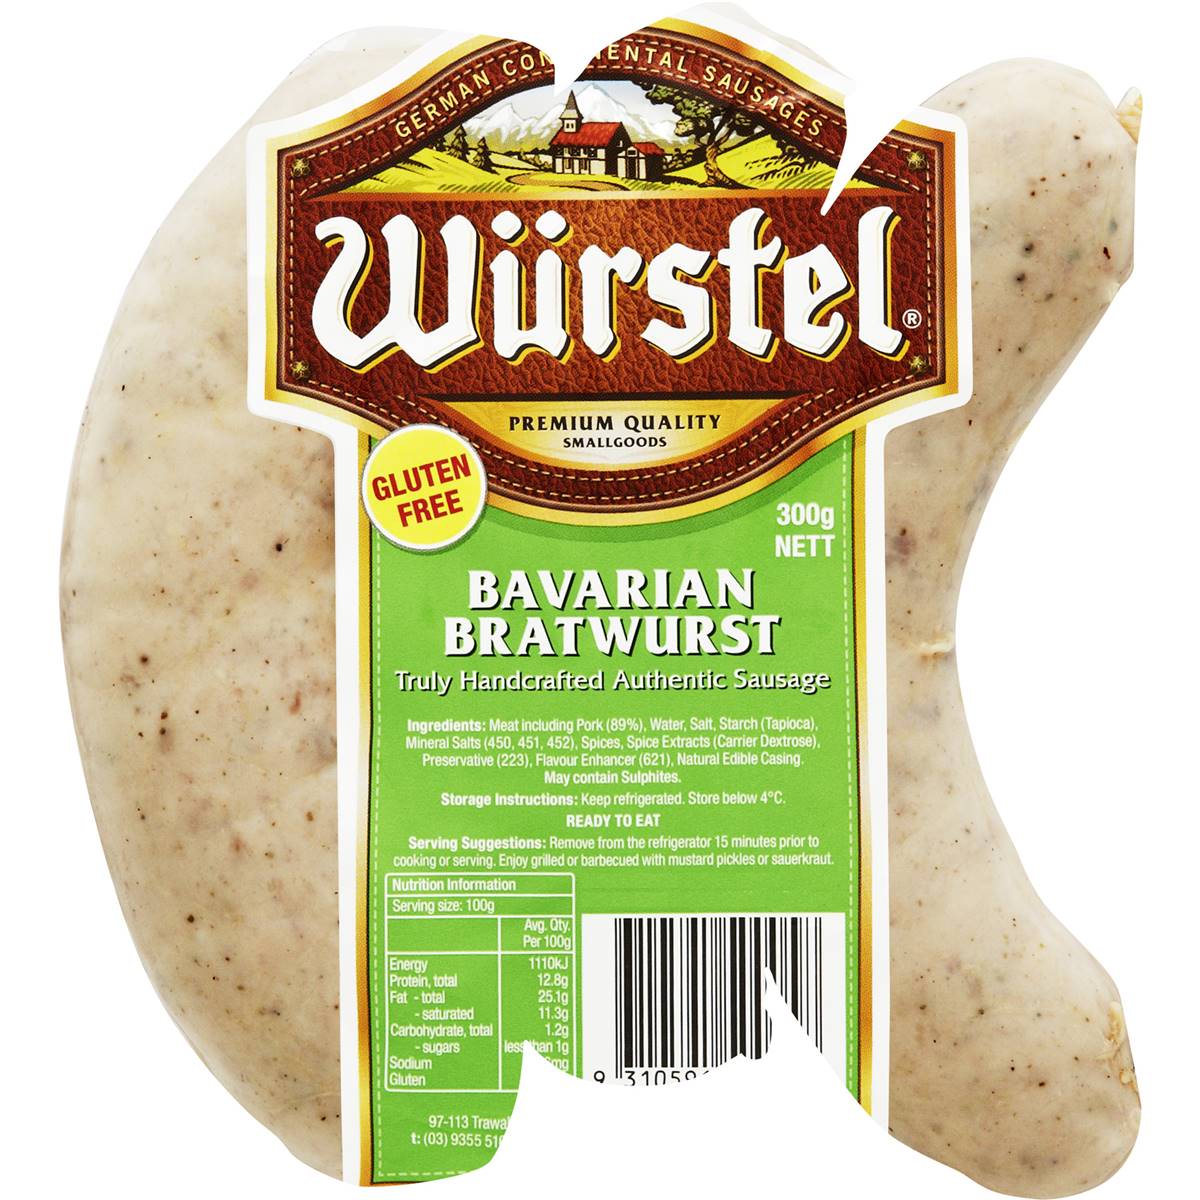 Calories in Wurstel Bratwurst Bavarian